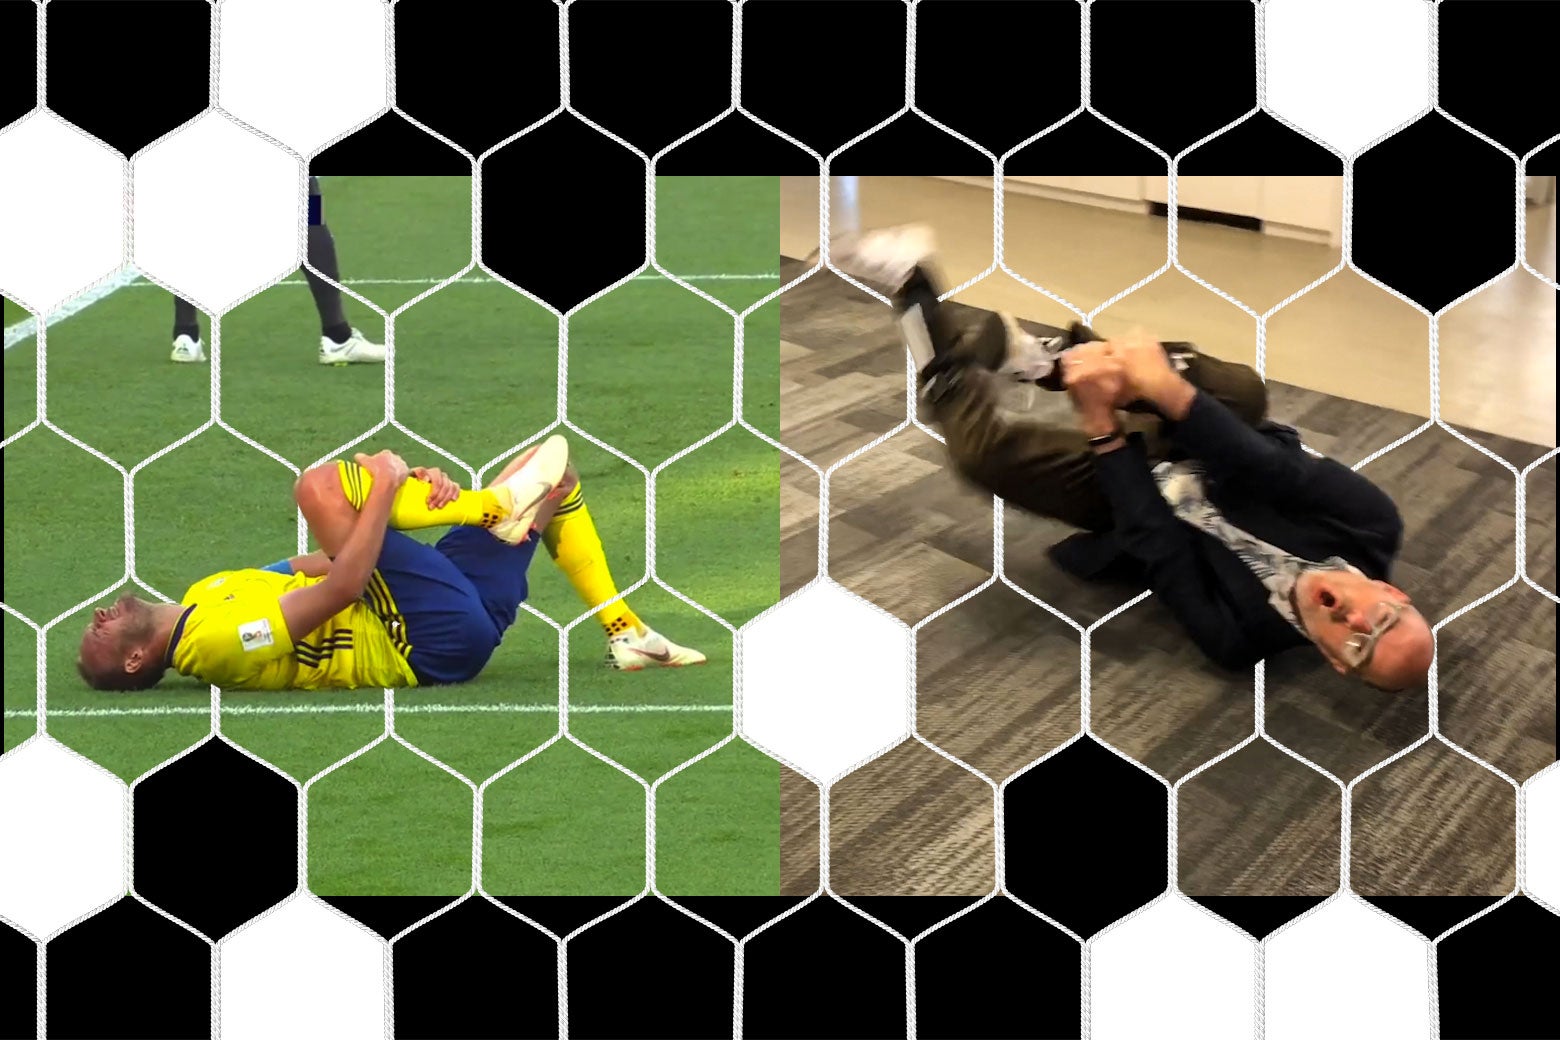 Soccer players fake shin injuries but shinguards actually work.